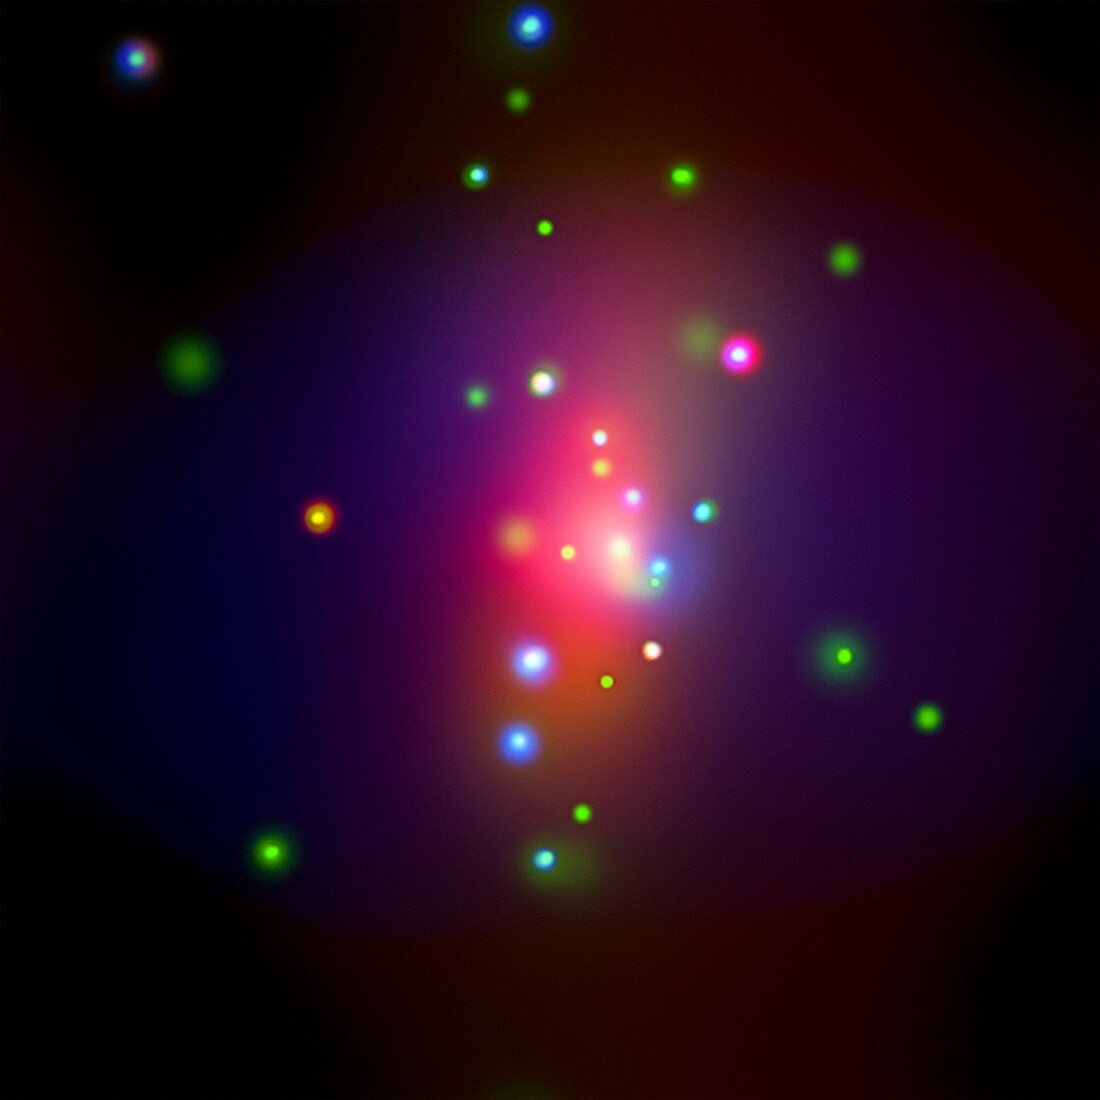 Galaxy containing supernova SN 2014C, X-ray image